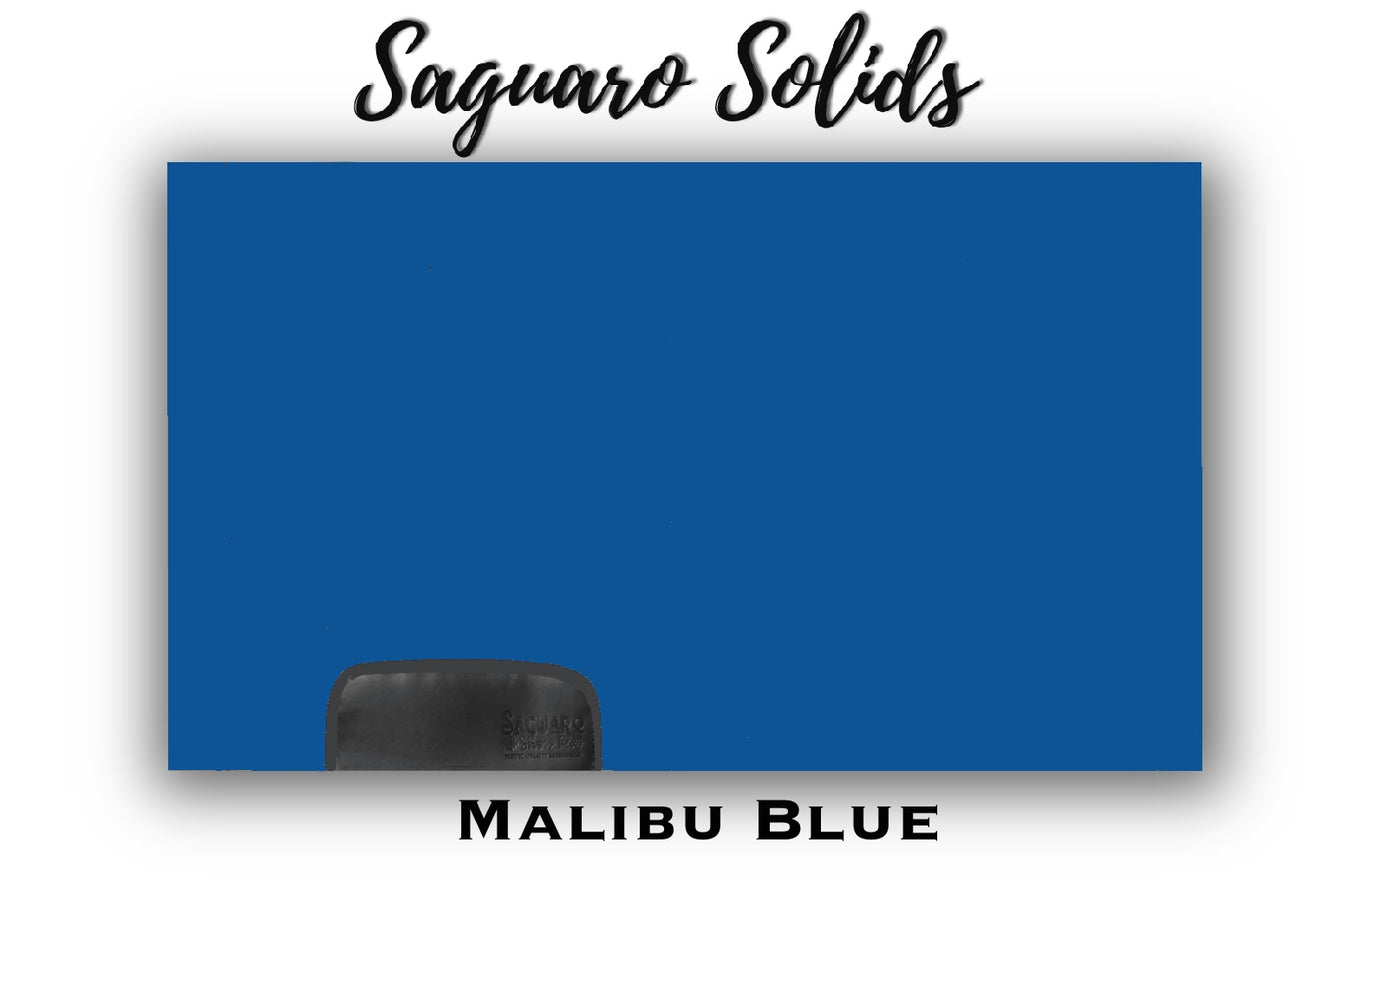 Saguaro Solid "Malibu Blue" Show Pad (SEMI-CUSTOM)